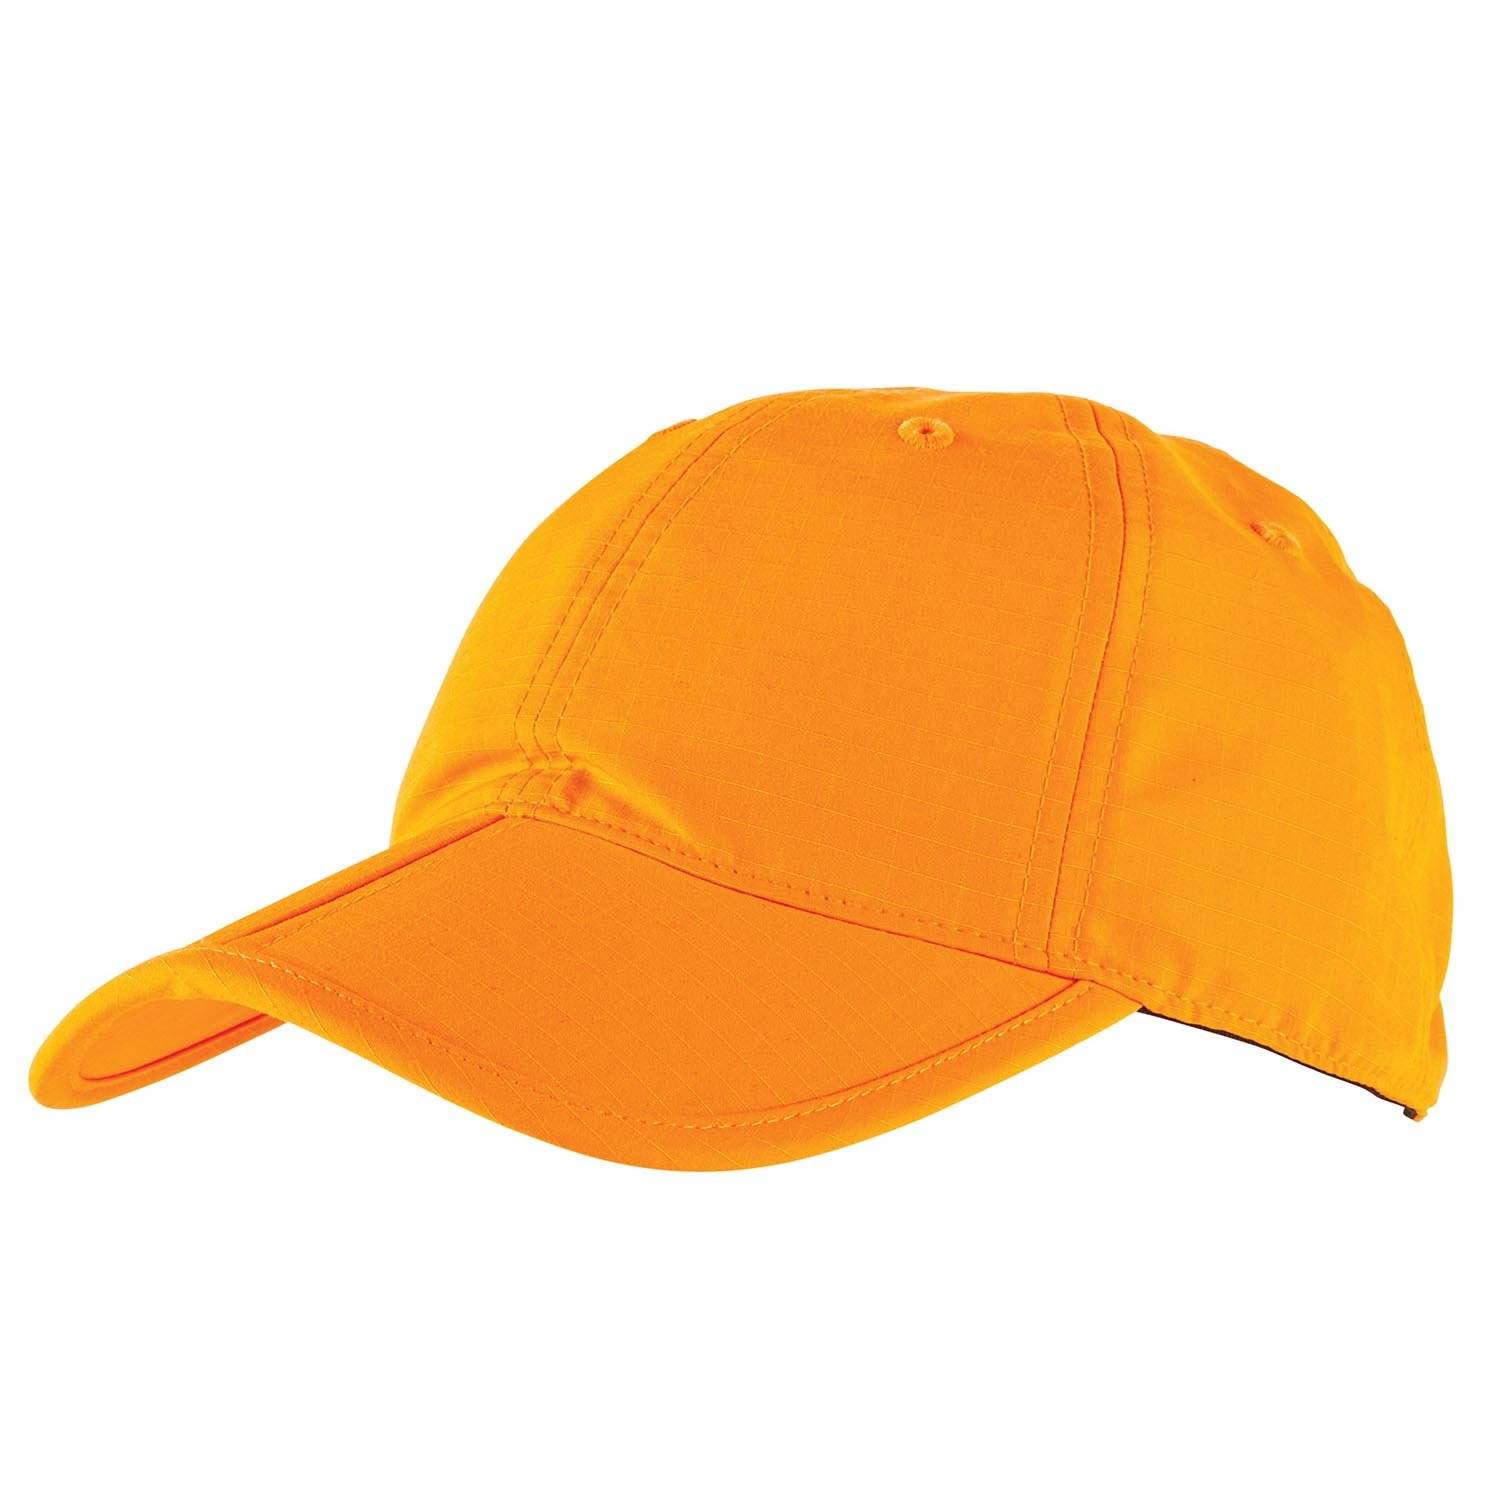 5.11 Tactical Hi-Vis Foldable Uniform Hat